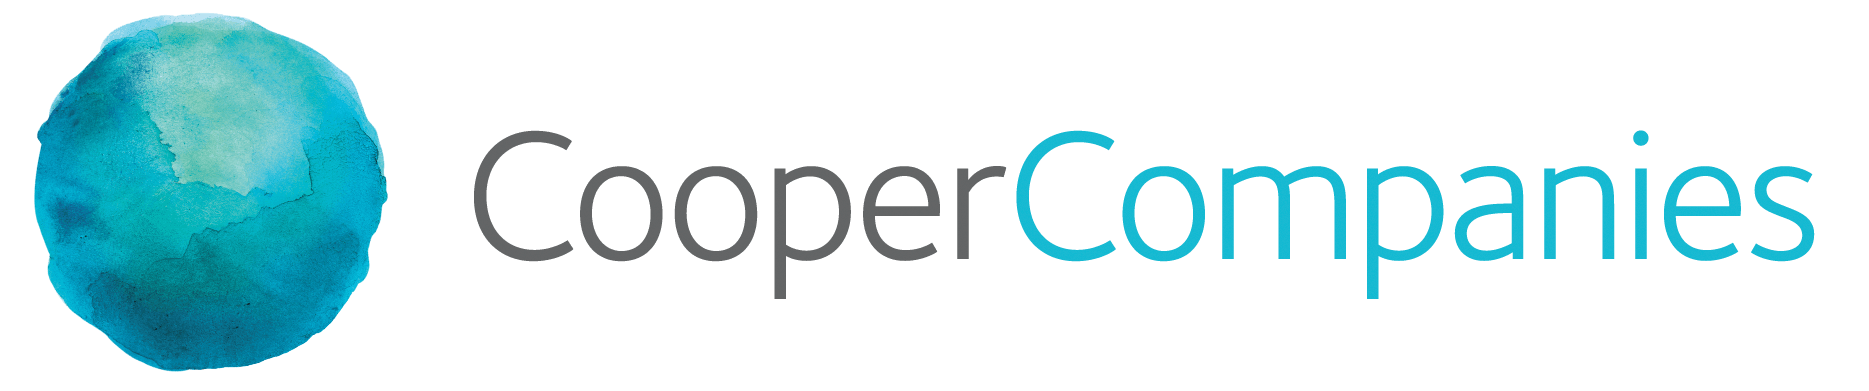 Cooper Companies